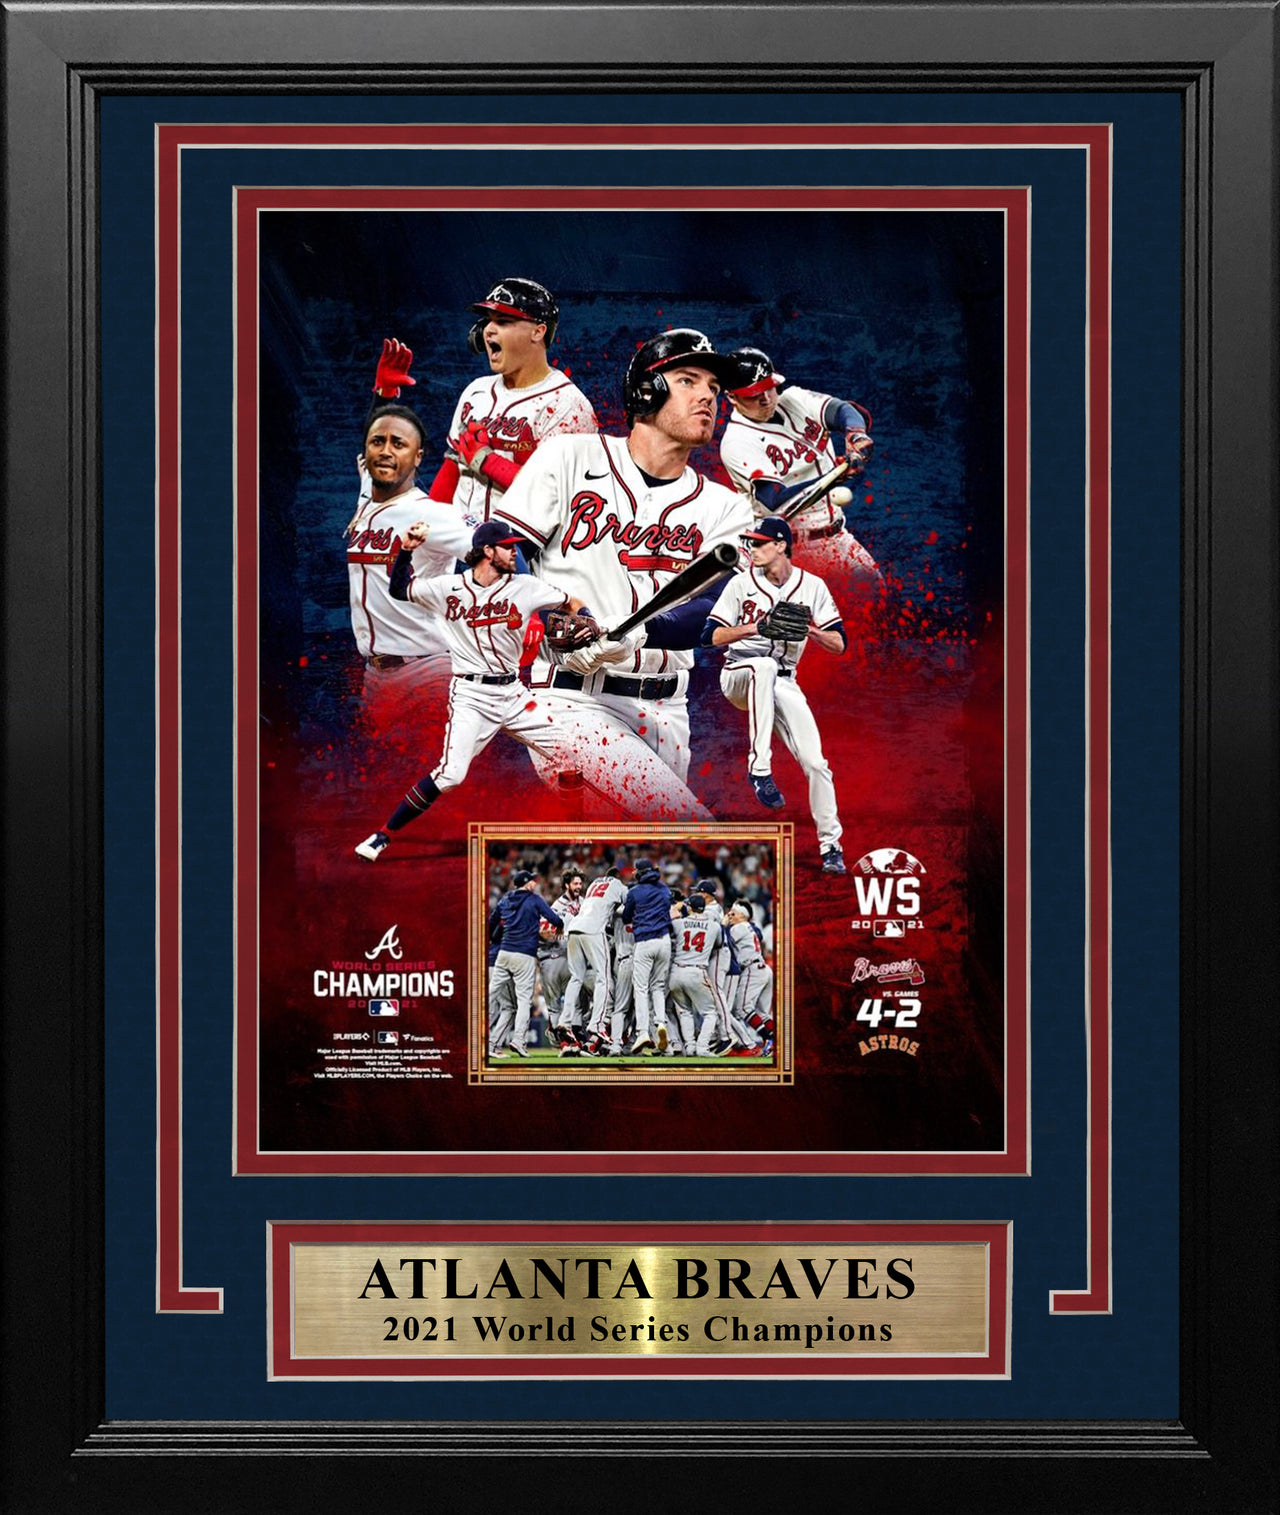 Atlanta Braves 2021 World Series Champions 8" x 10" Framed Baseball Collage Photo - Dynasty Sports & Framing 